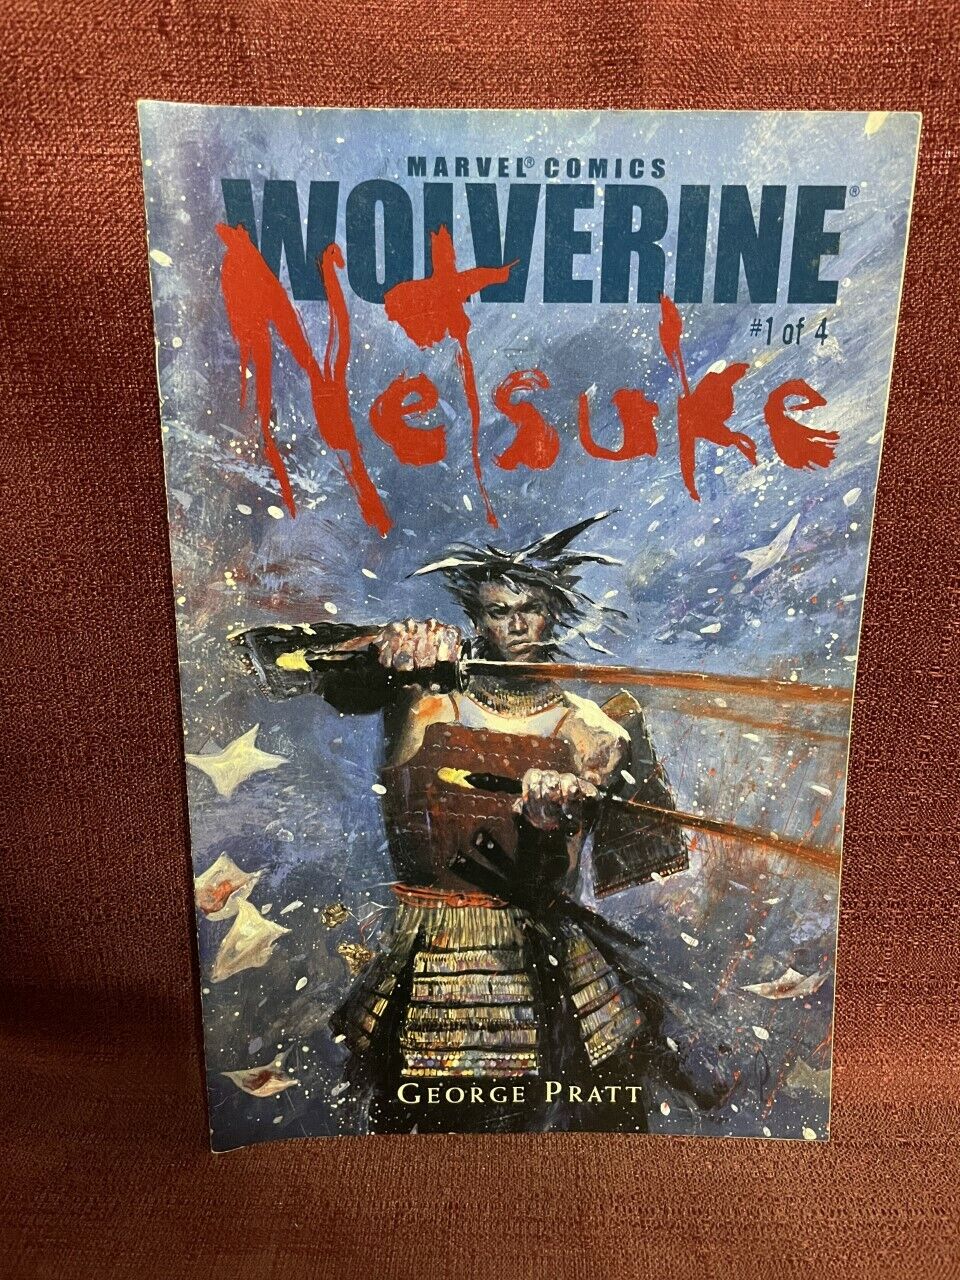 Wolverine Netsuke Vol. 1 #1 2002 Marvel Comics